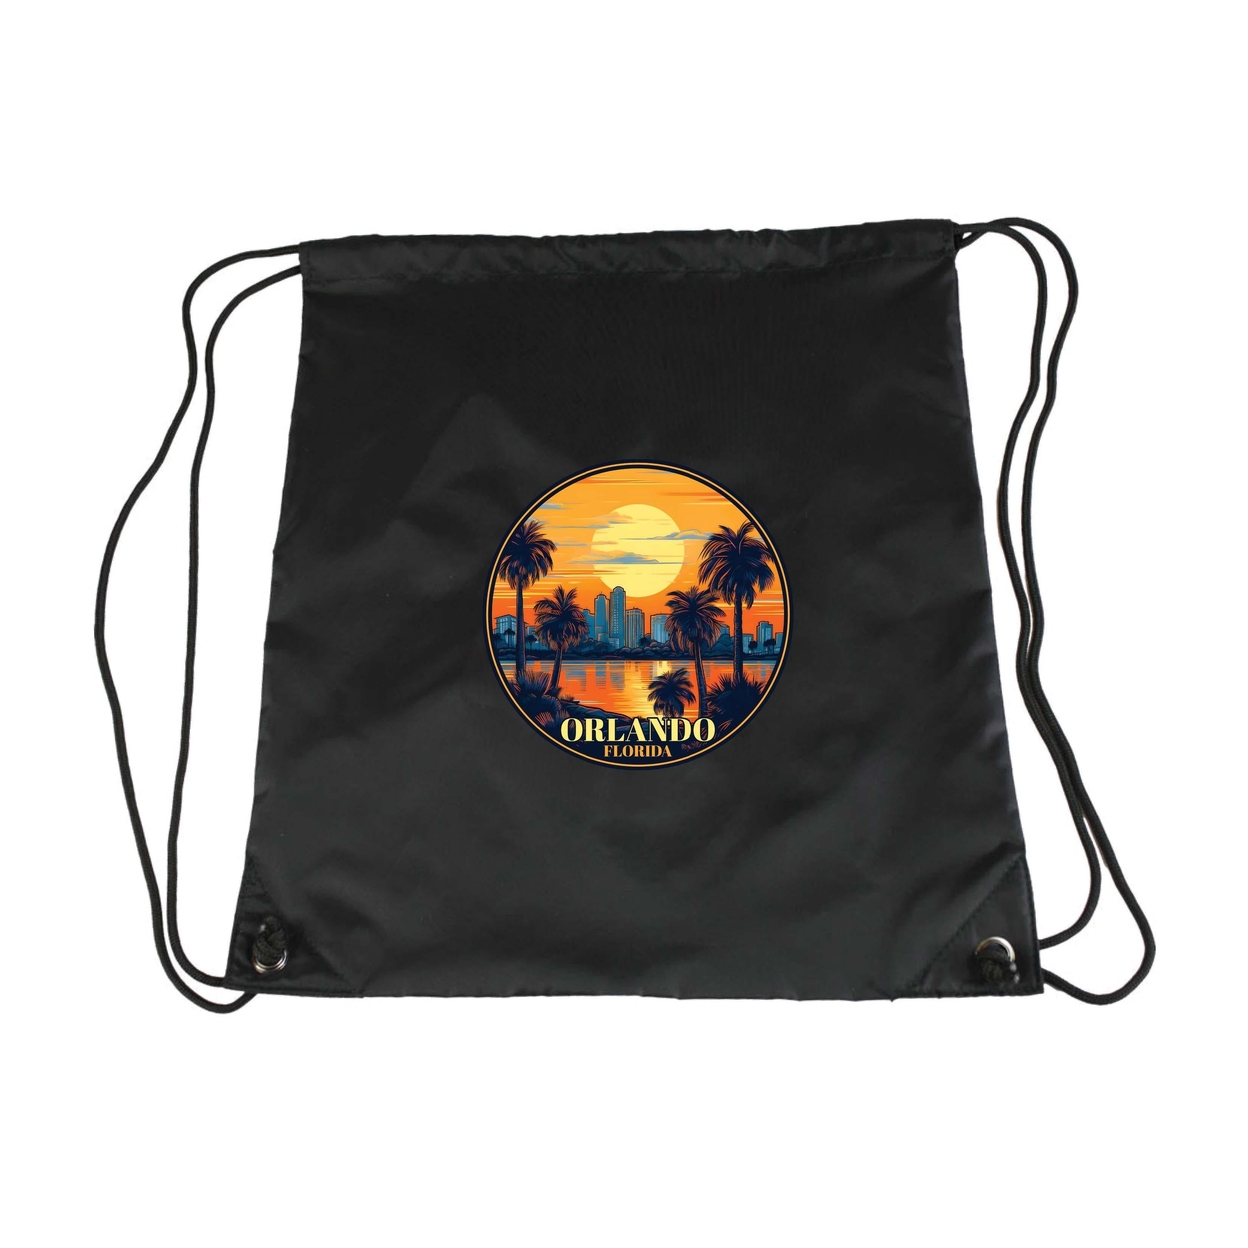 Orlando Florida B Souvenir Cinch Bag With Drawstring Backpack - Orange